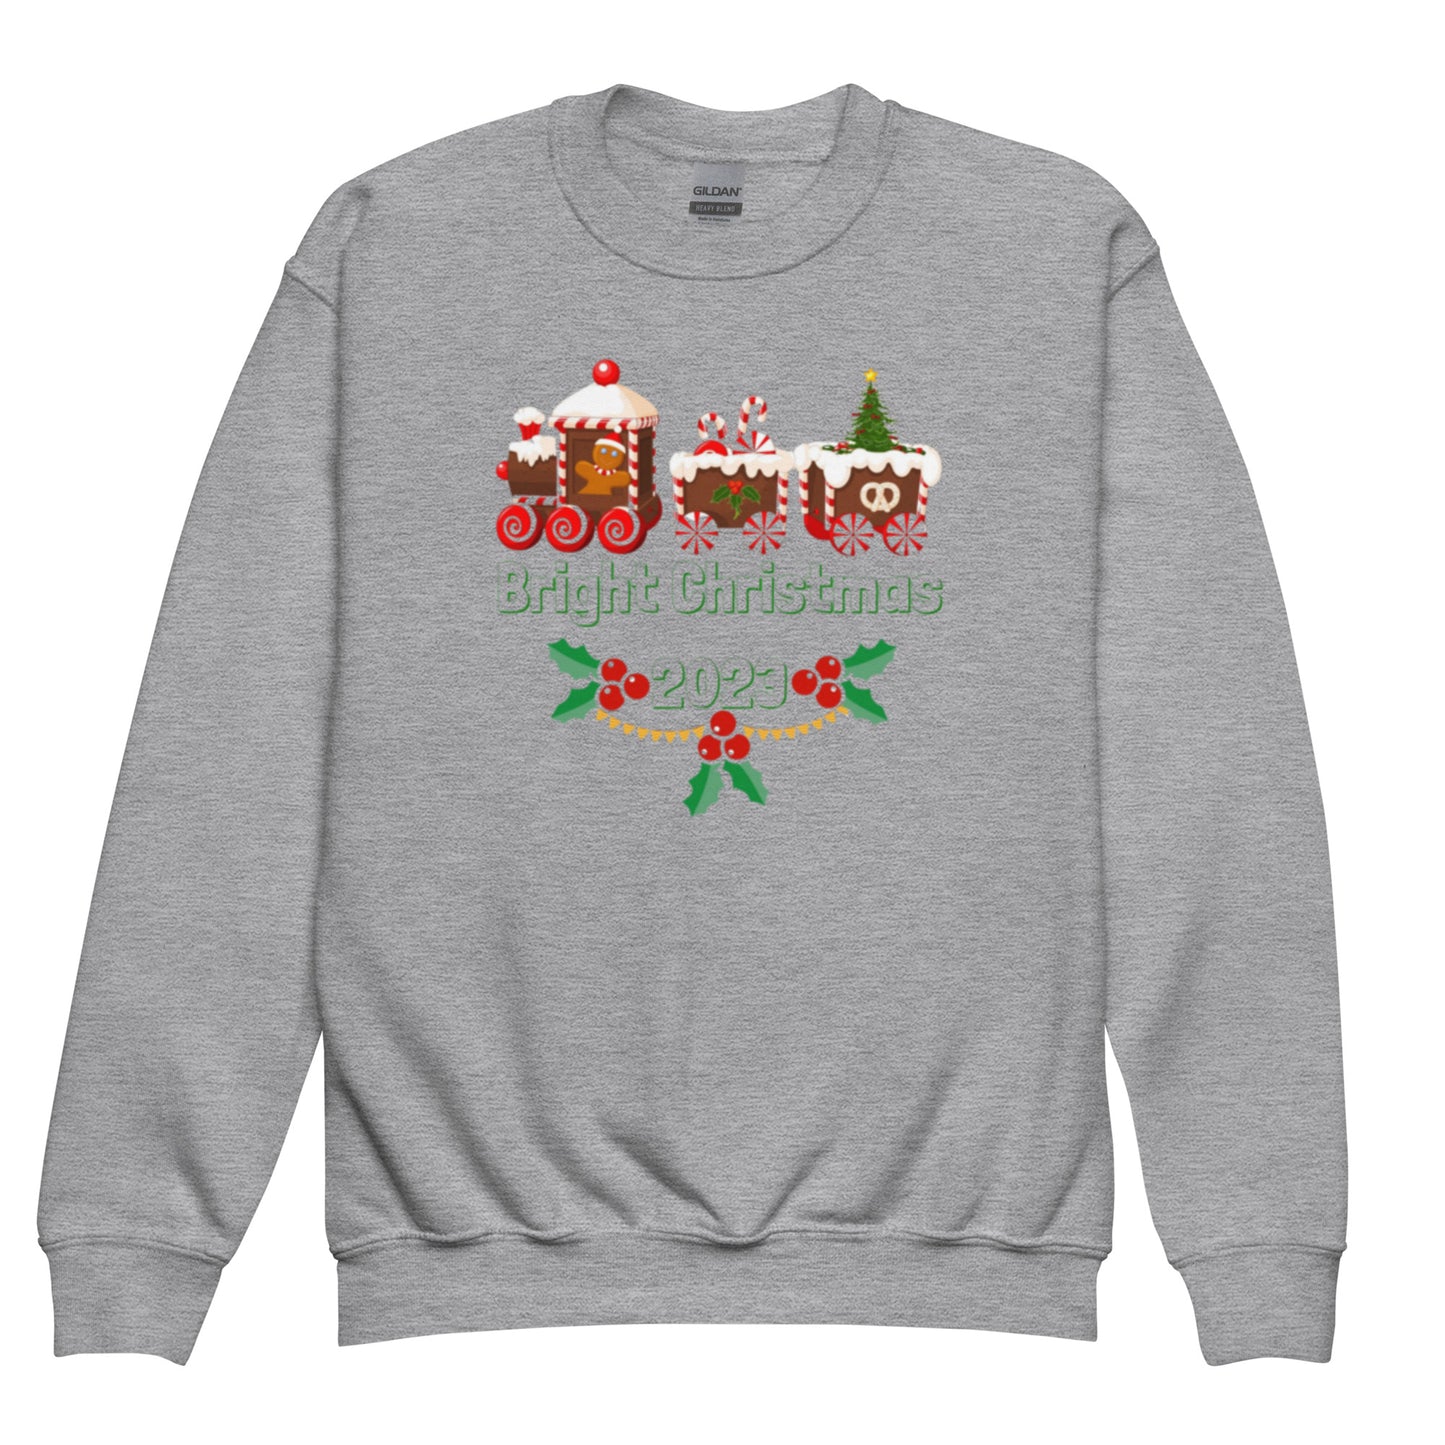 Bright Christmas Youth crewneck sweatshirt